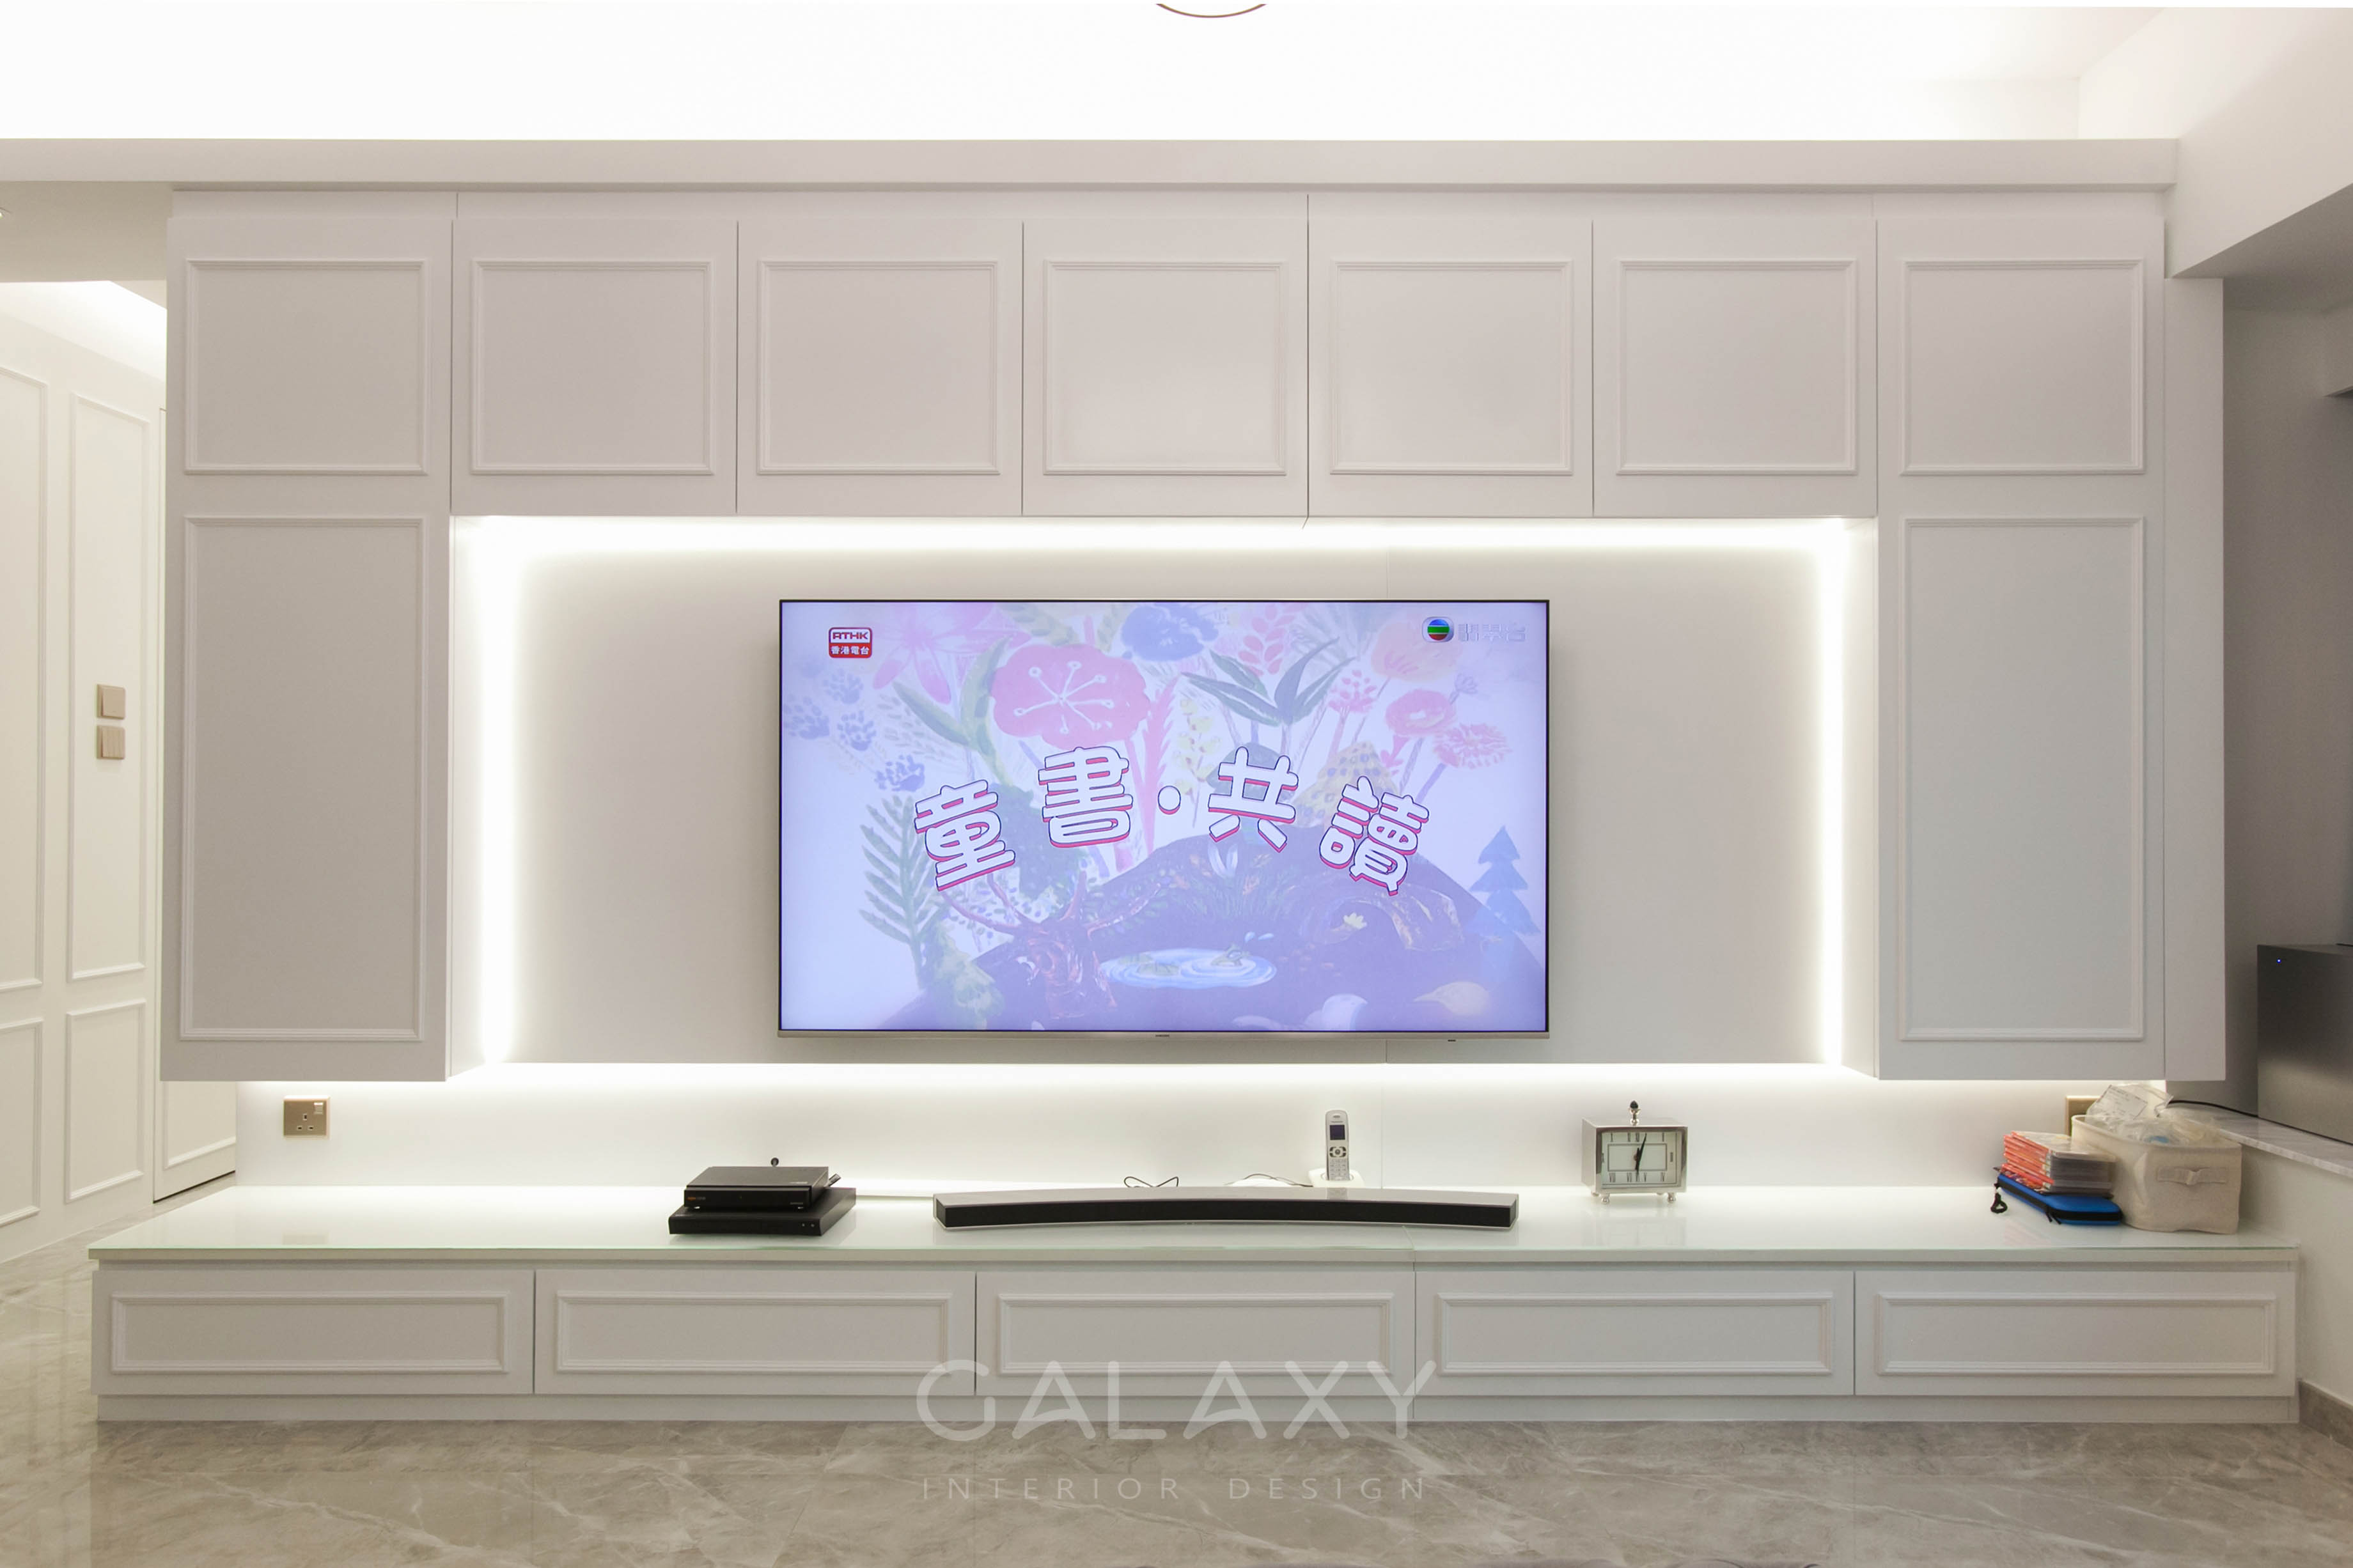 黎永鈞 - Galaxy Interior Design - 雍景臺